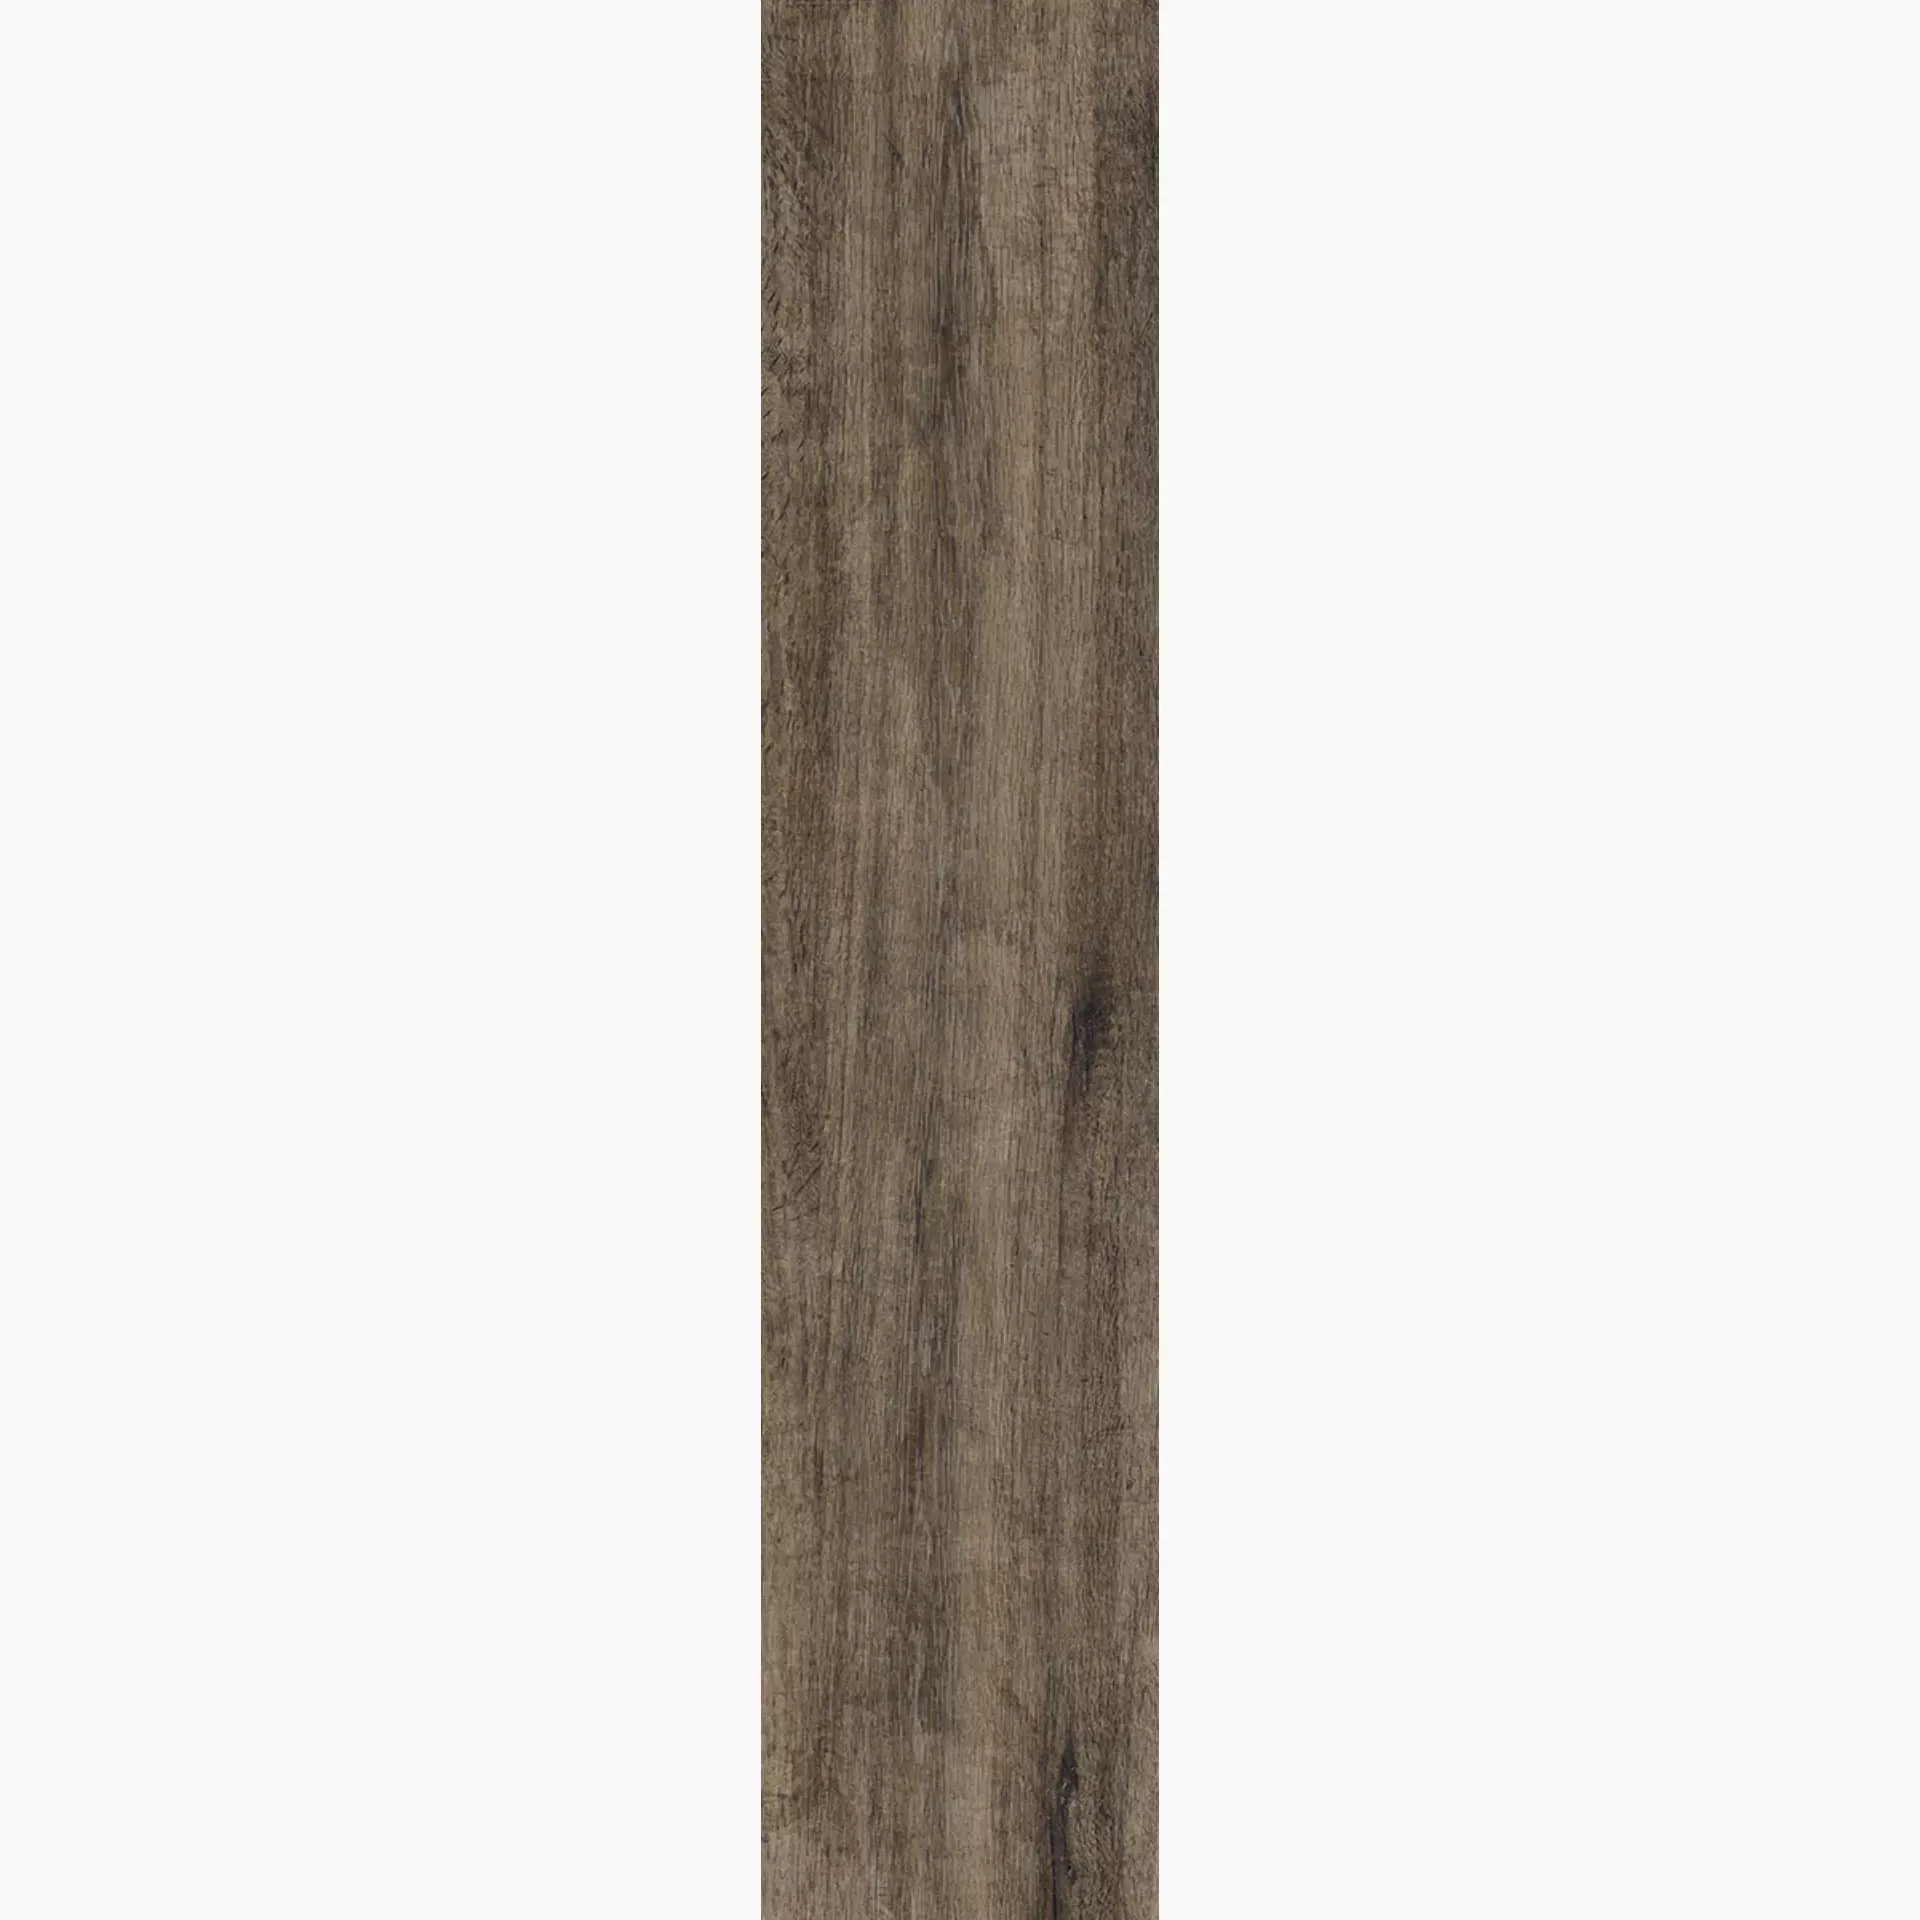 Rondine Greenwood Greige Naturale J86328 24x120cm 9,5mm